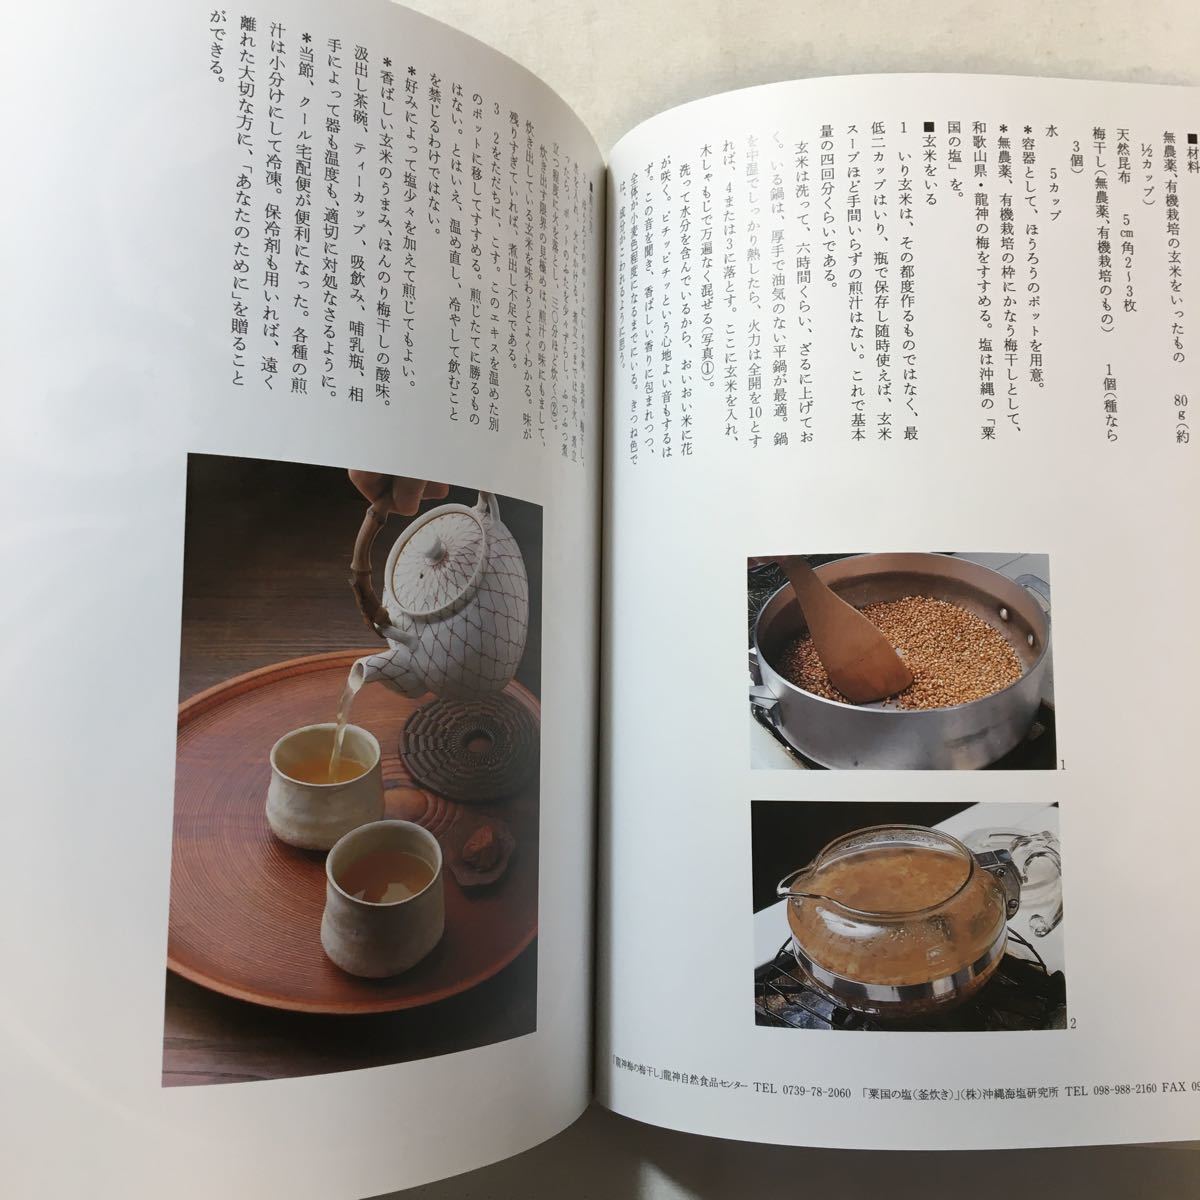 zaa-296♪あなたのために―いのちを支えるスープ 単行本 2002/8/1 辰巳 芳子 (著)